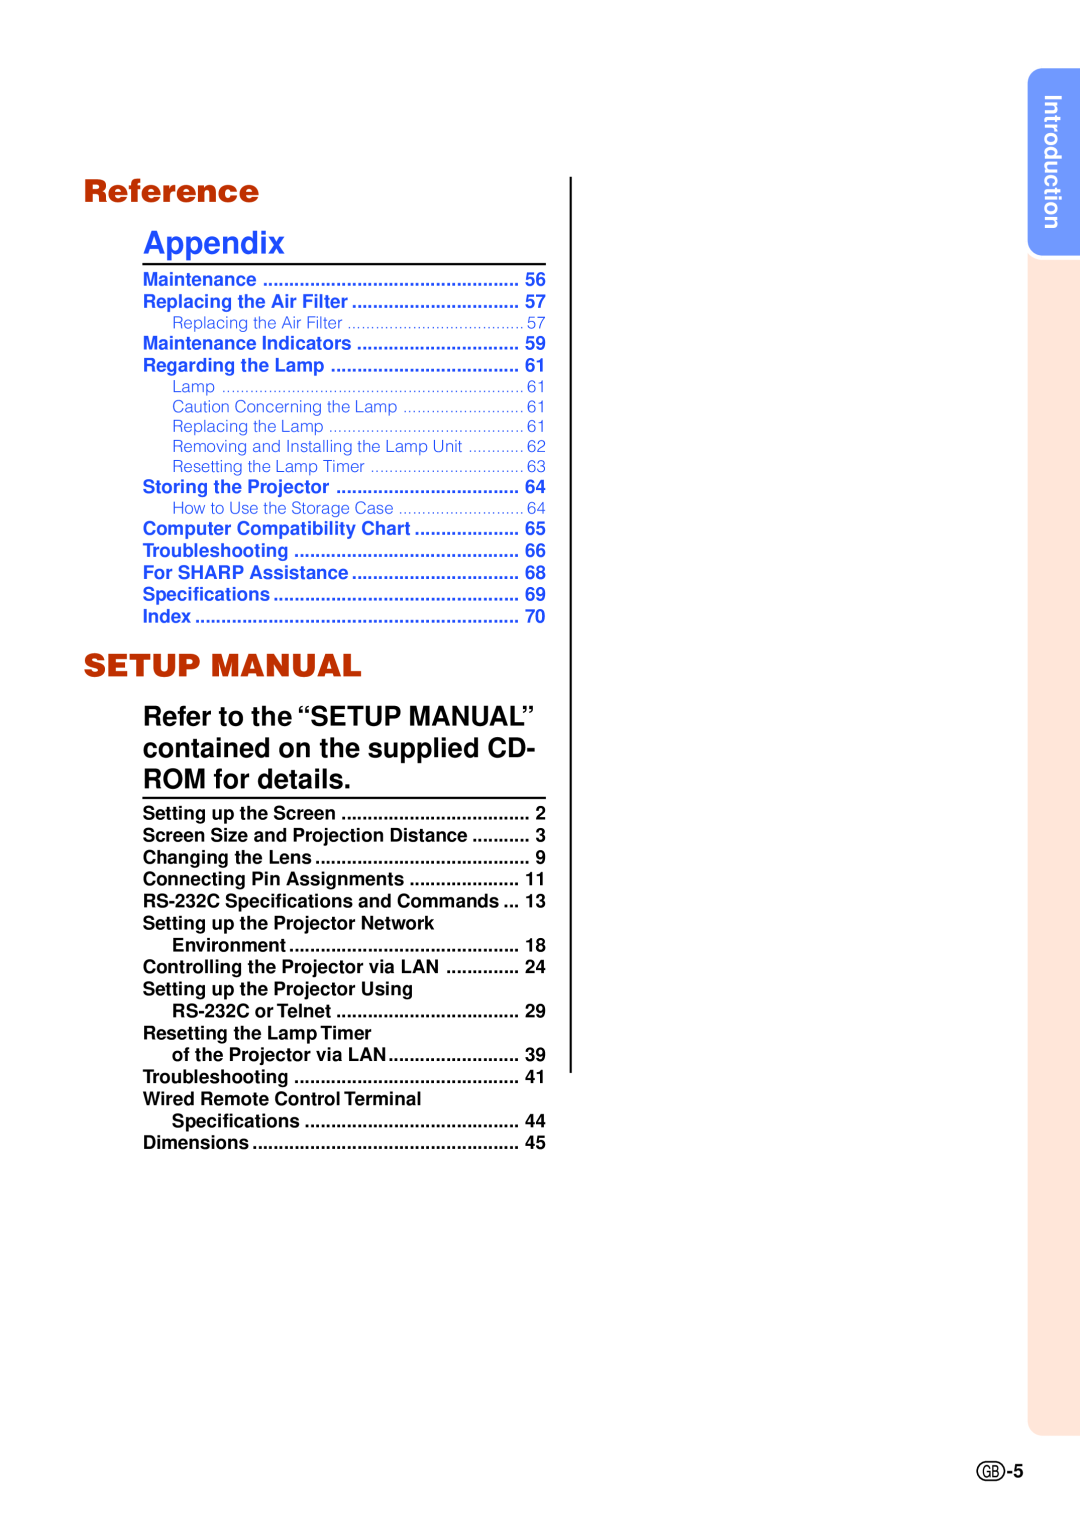 Sharp XG-C435X-L, XG-C465X-L operation manual Reference, Appendix, Setup Manual, Introduction 